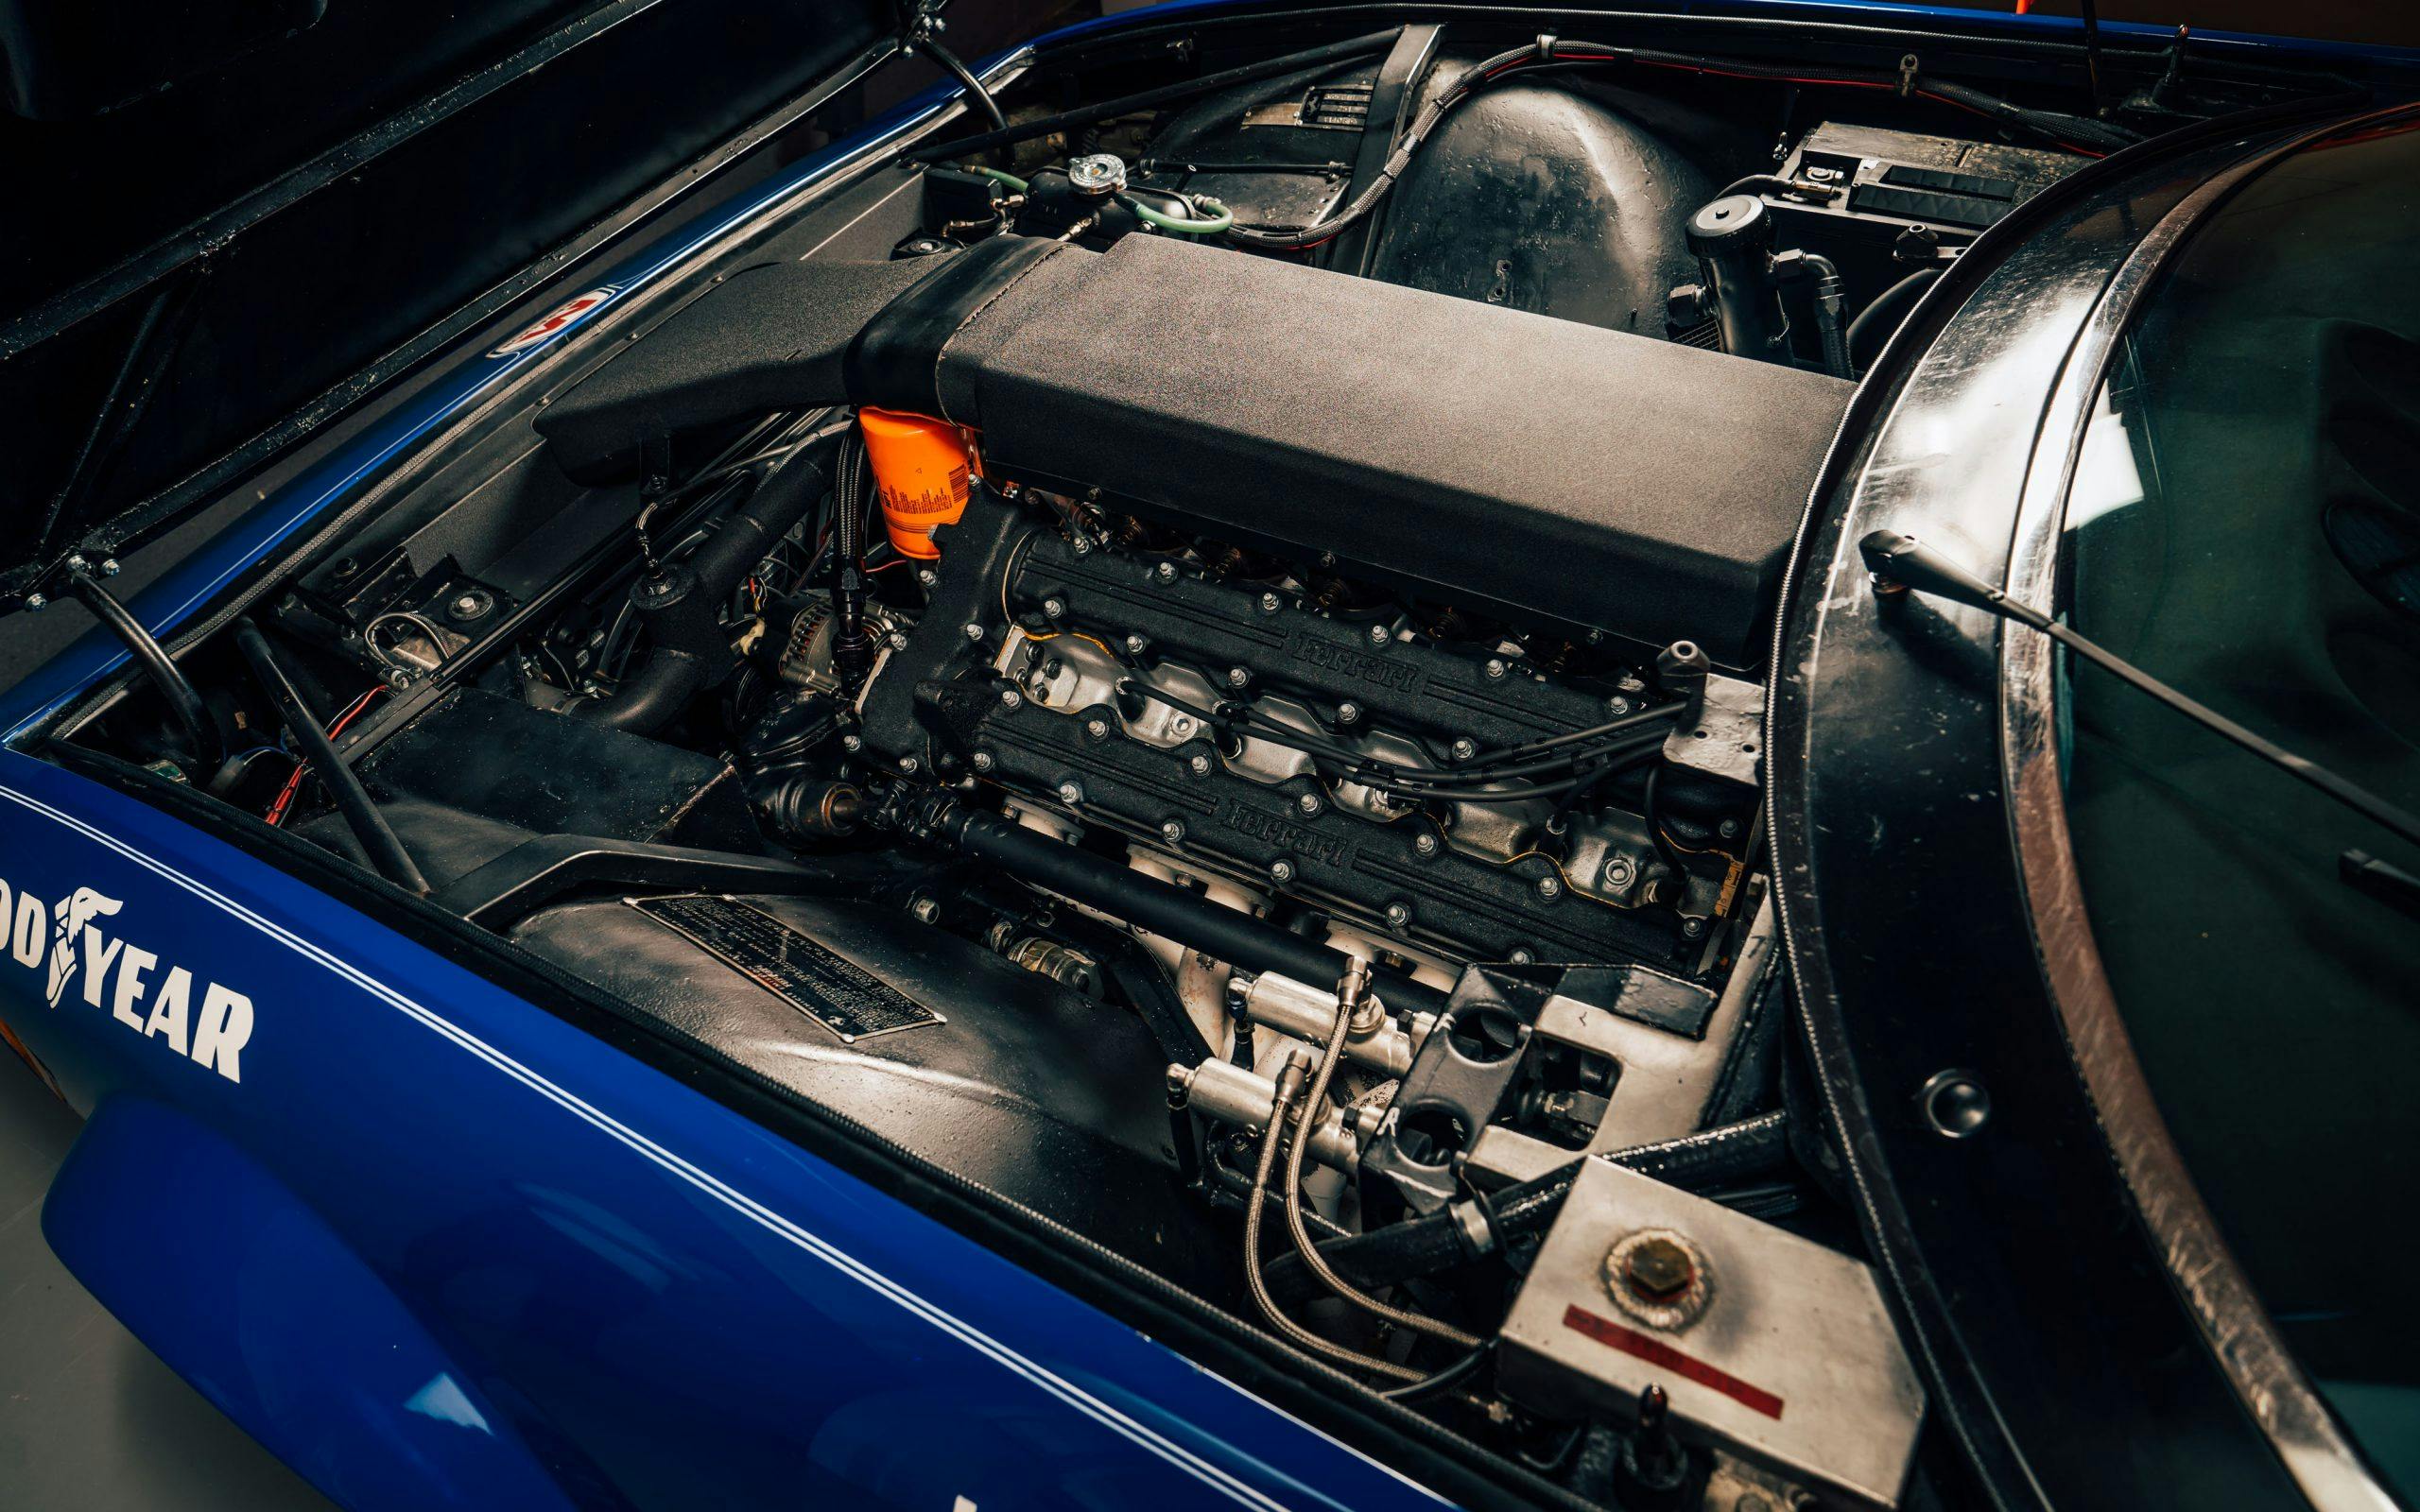 Ferrari 365 GTB:4 Daytona engine